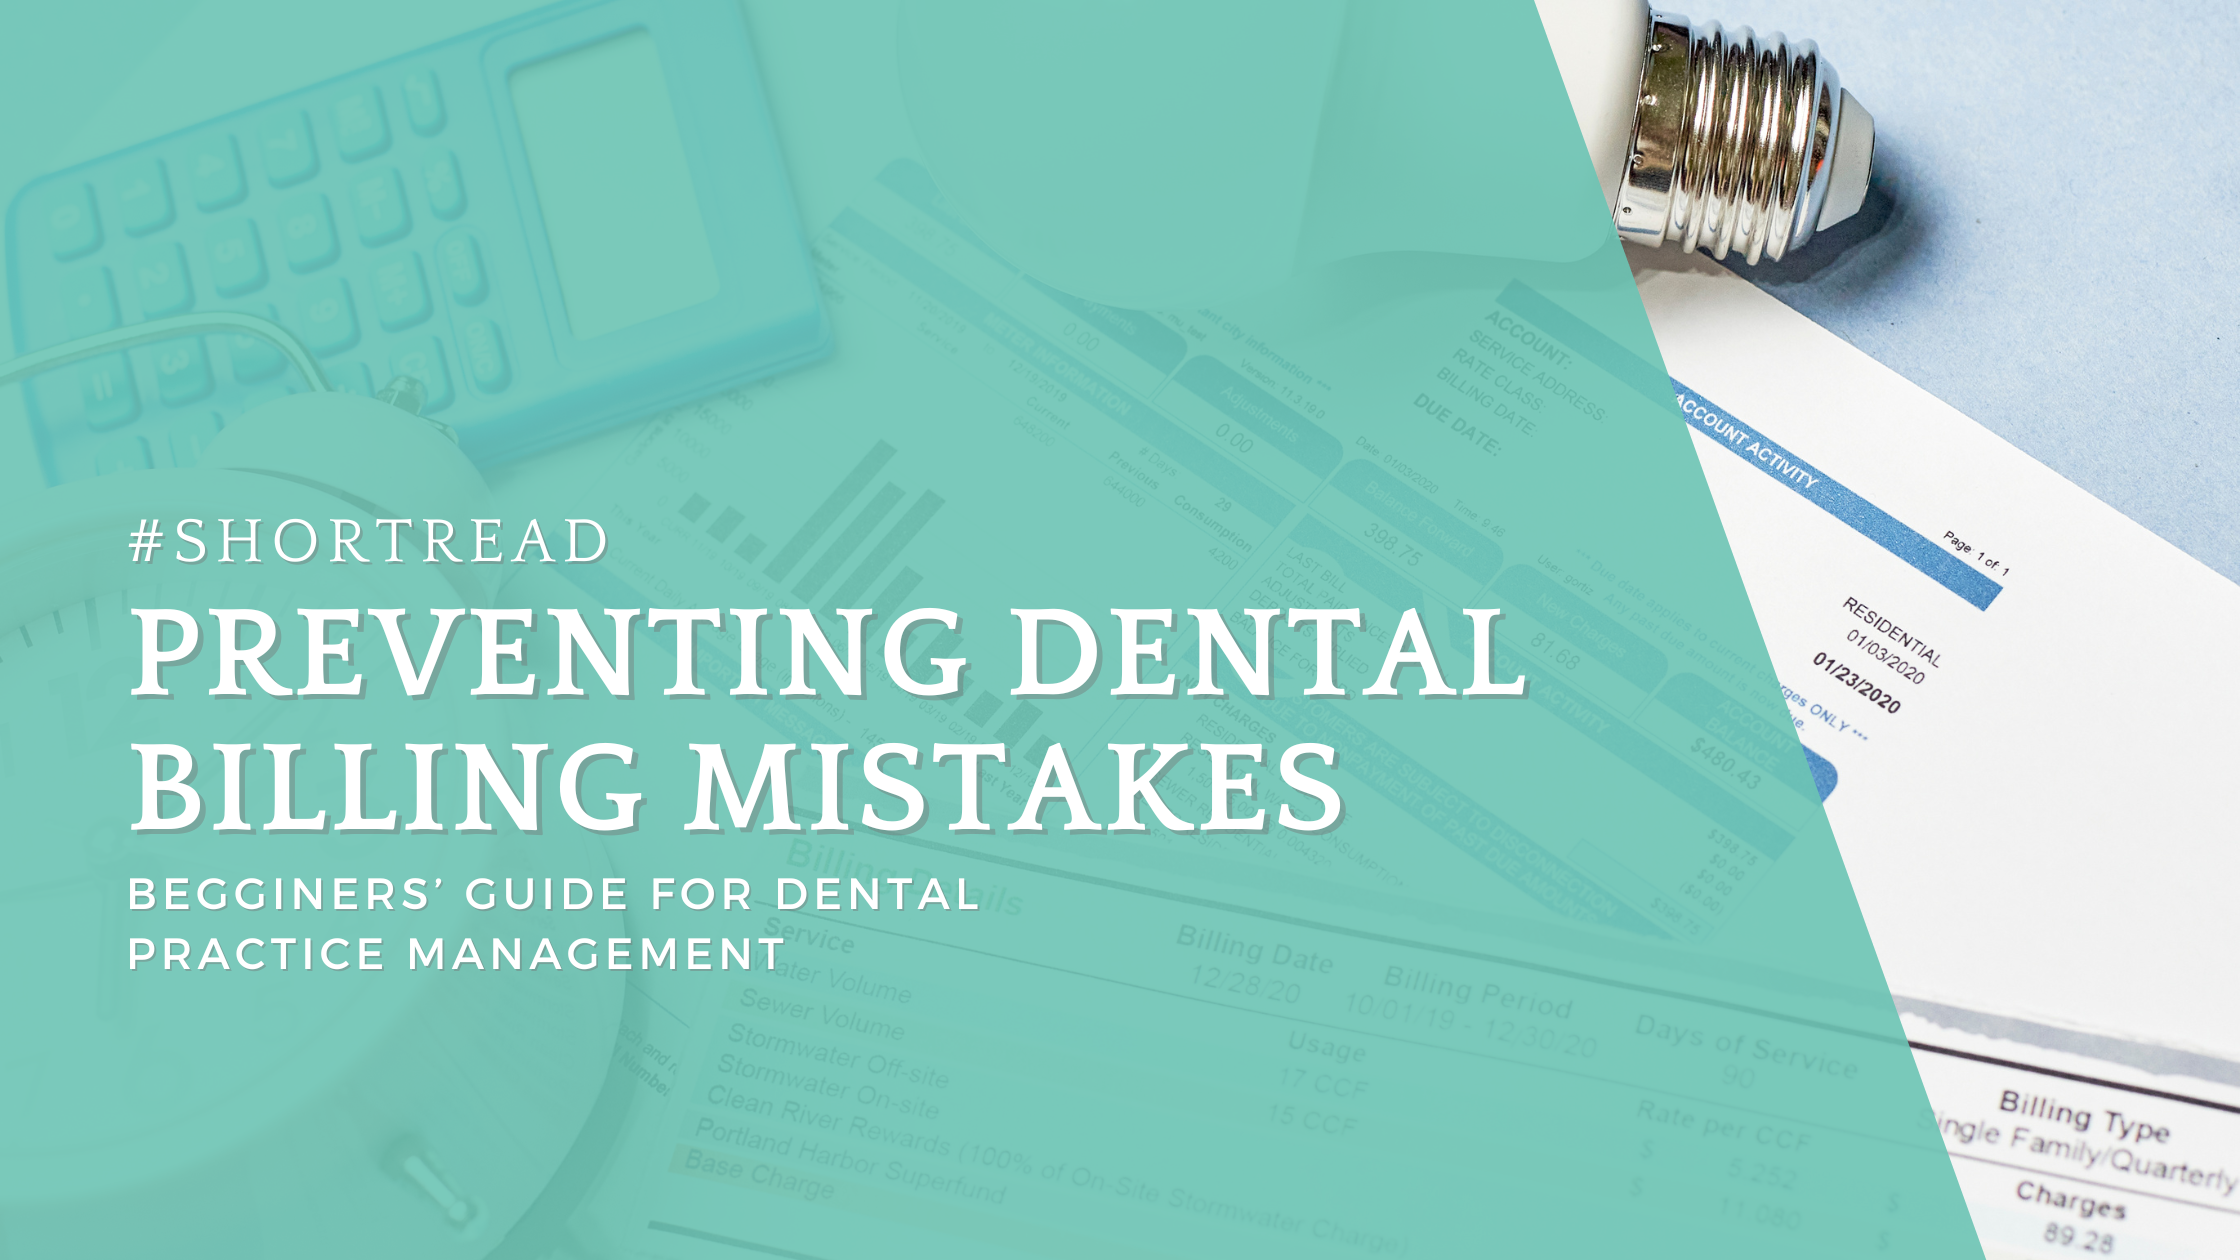 Blog header titled "#ShortRead, Preventing Dental Billing Mistakes"